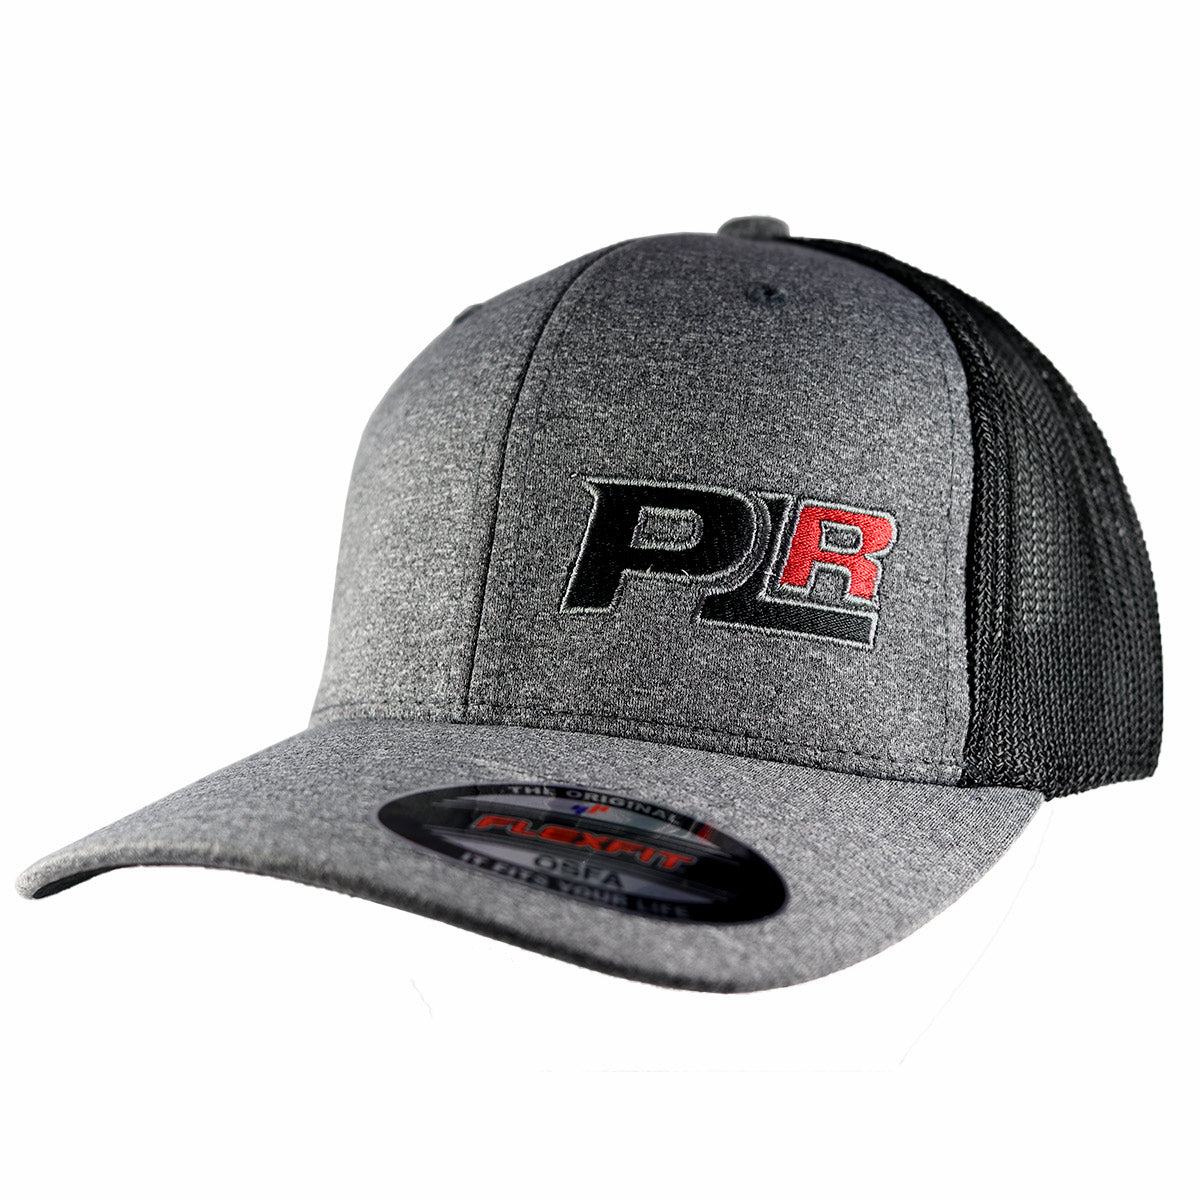 PLR HEATHER GREY FLEXFIT MESH - Racing Pro Line HAT